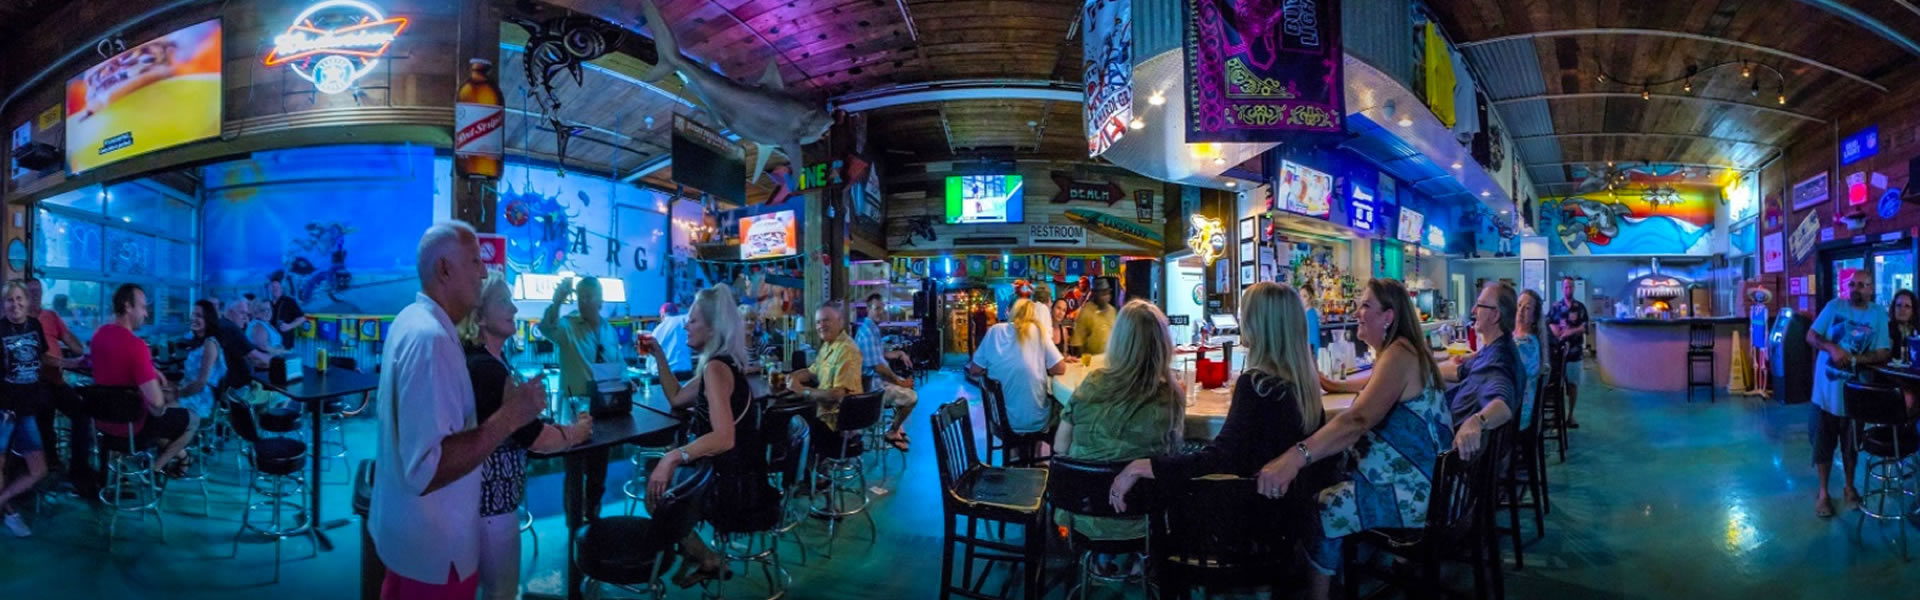 Sharky’s Tavern, Galveston TX